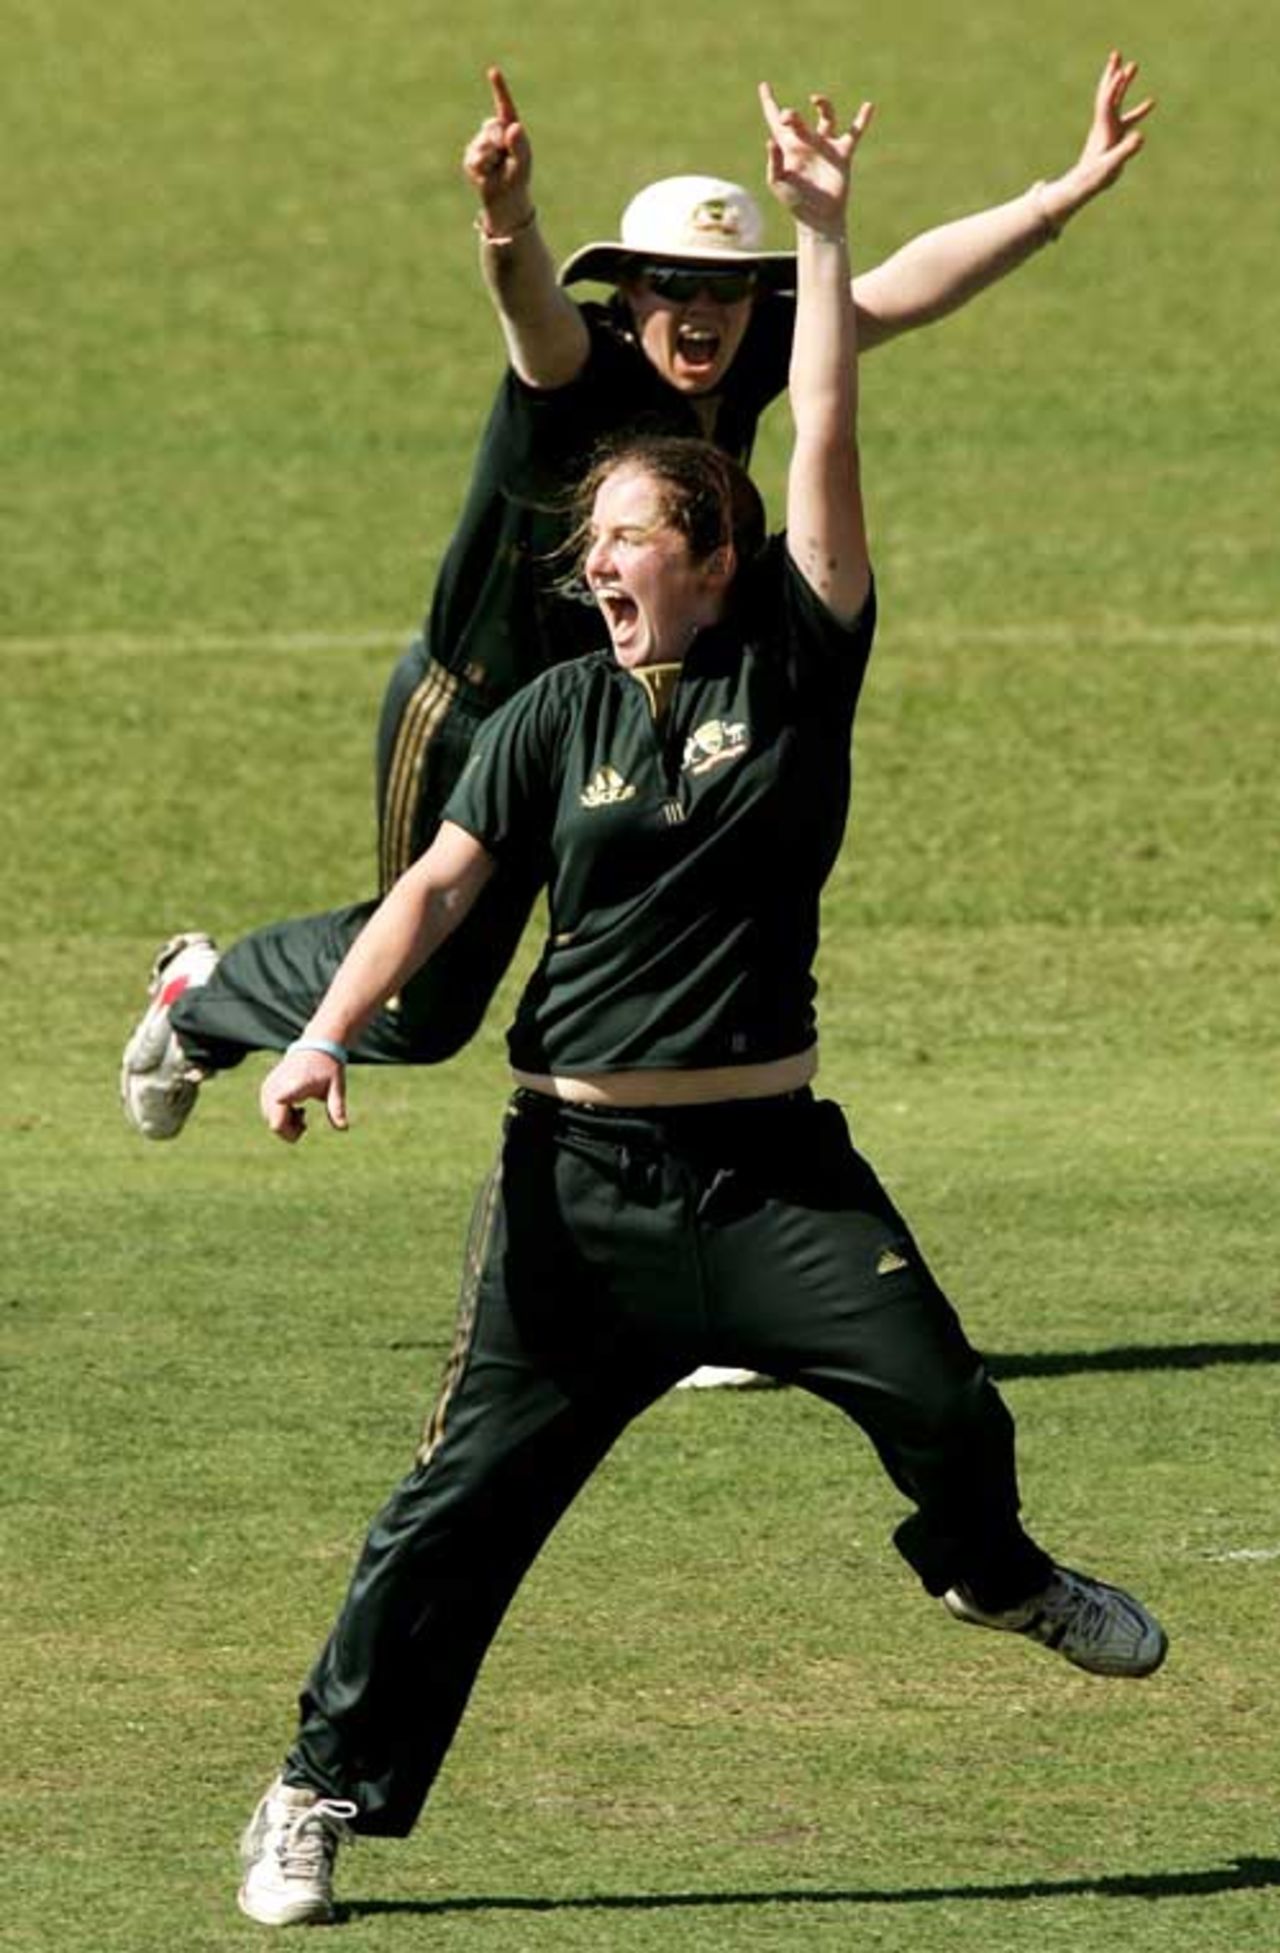 Rene Farrell took two wickets in her first two overs in her debut, Australia women v New Zealand women, 4th ODI, Darwin, July 28, 2007